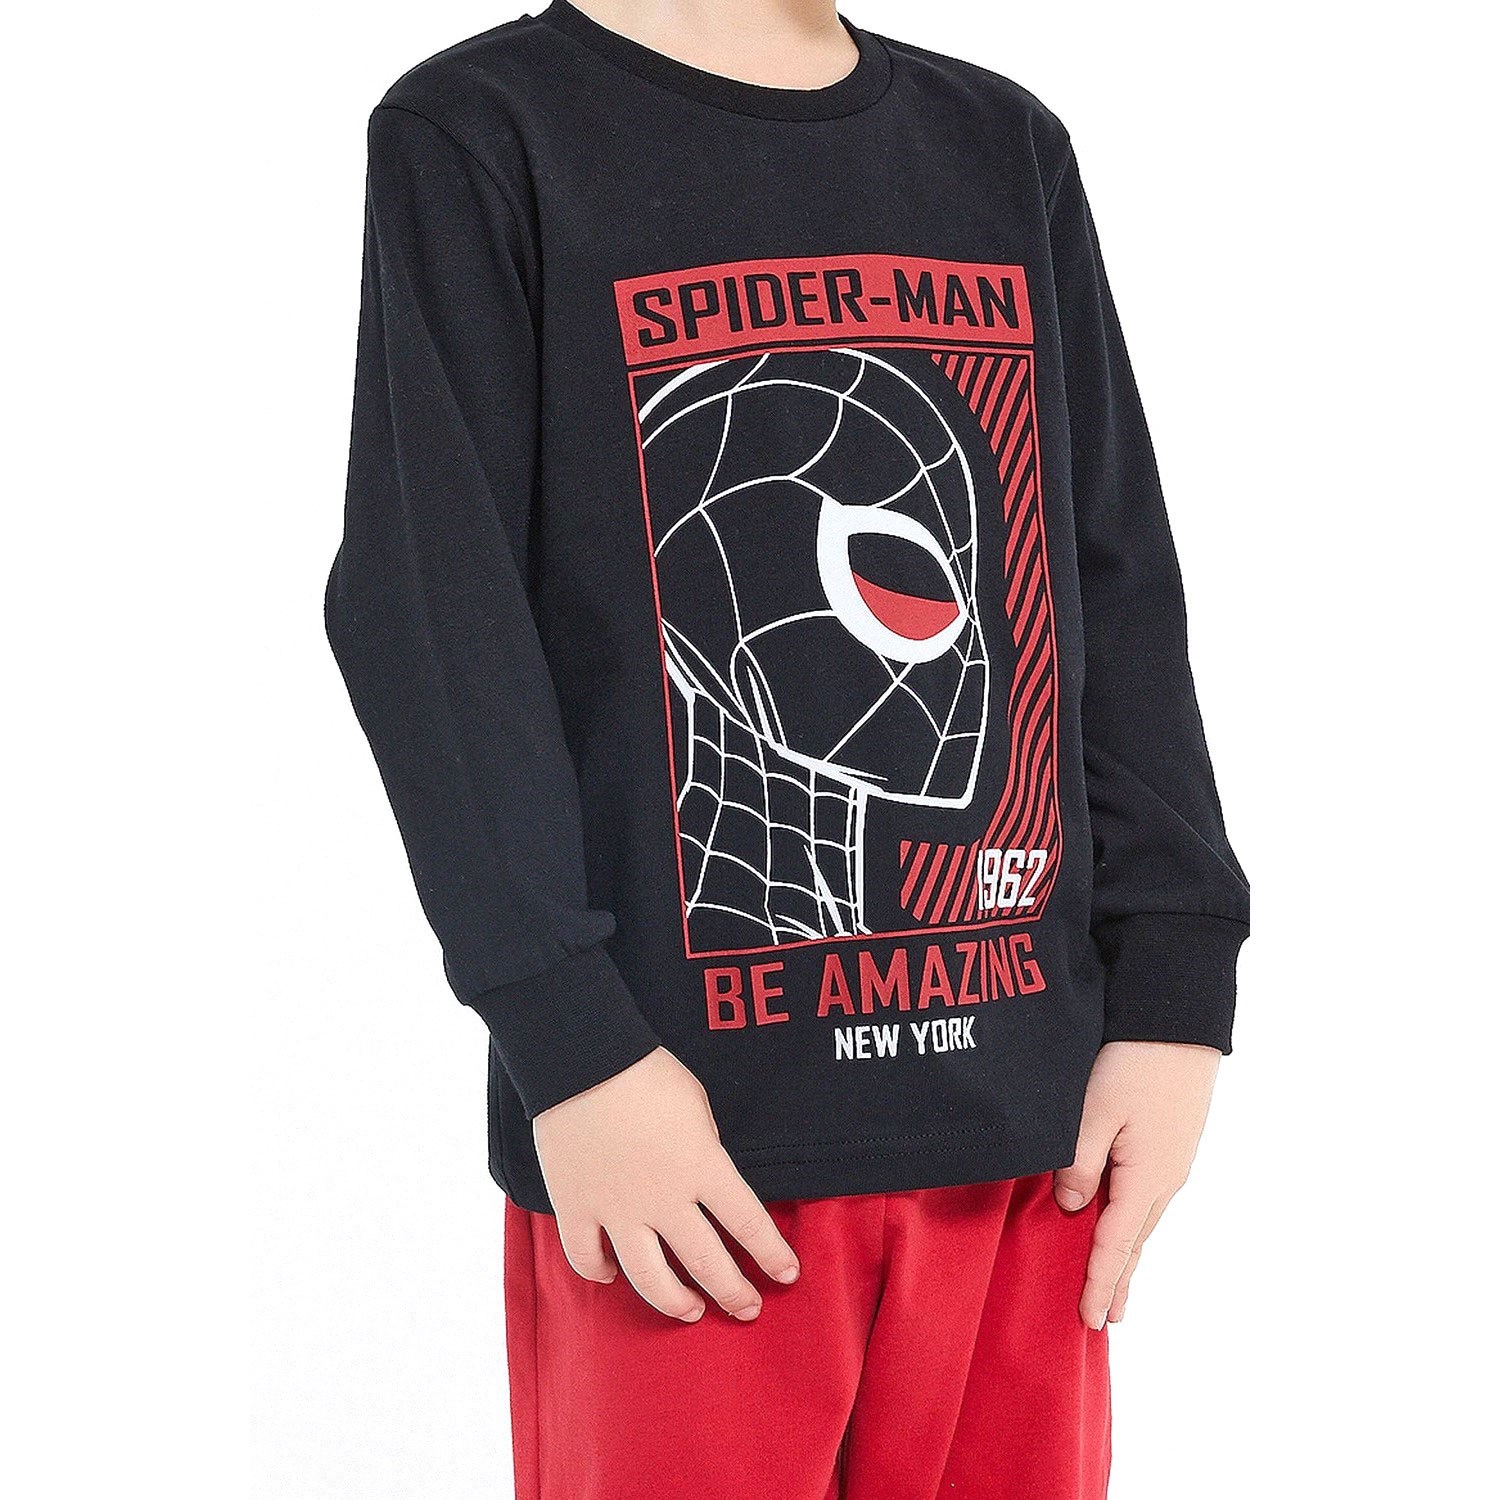 Spider-Man Erkek Çocuk 2'li Takım D4719-3 Siyah